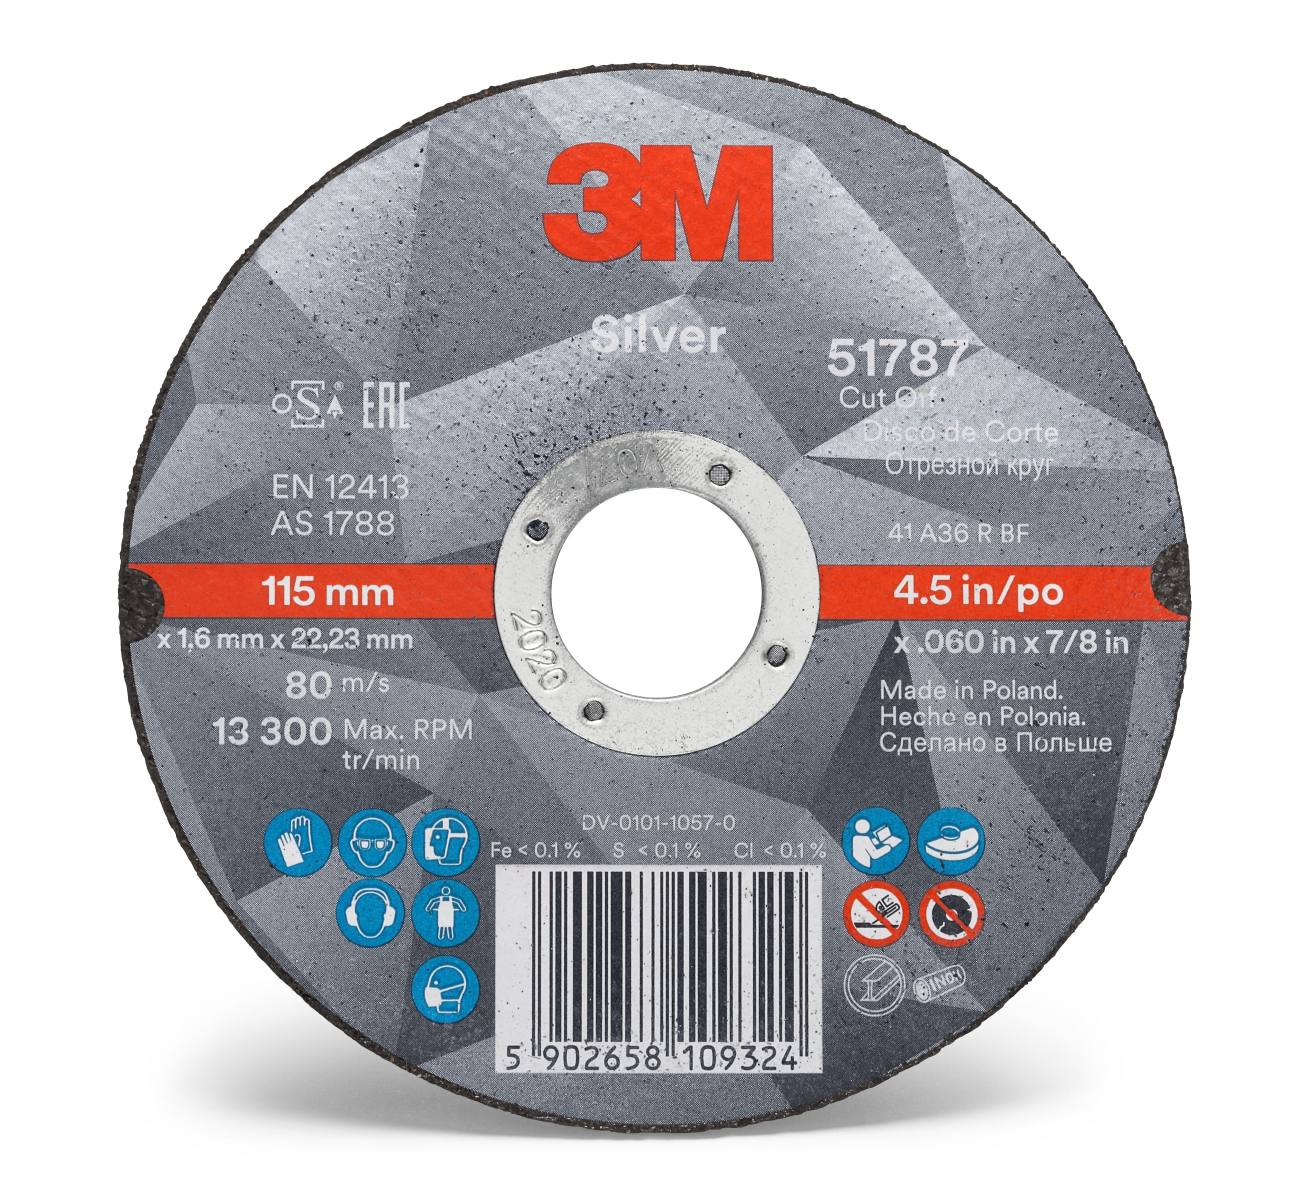 Disco de corte 3M Silver Cut-Off, 115 mm, 1.0 mm, 22.23 mm, T41, 51785